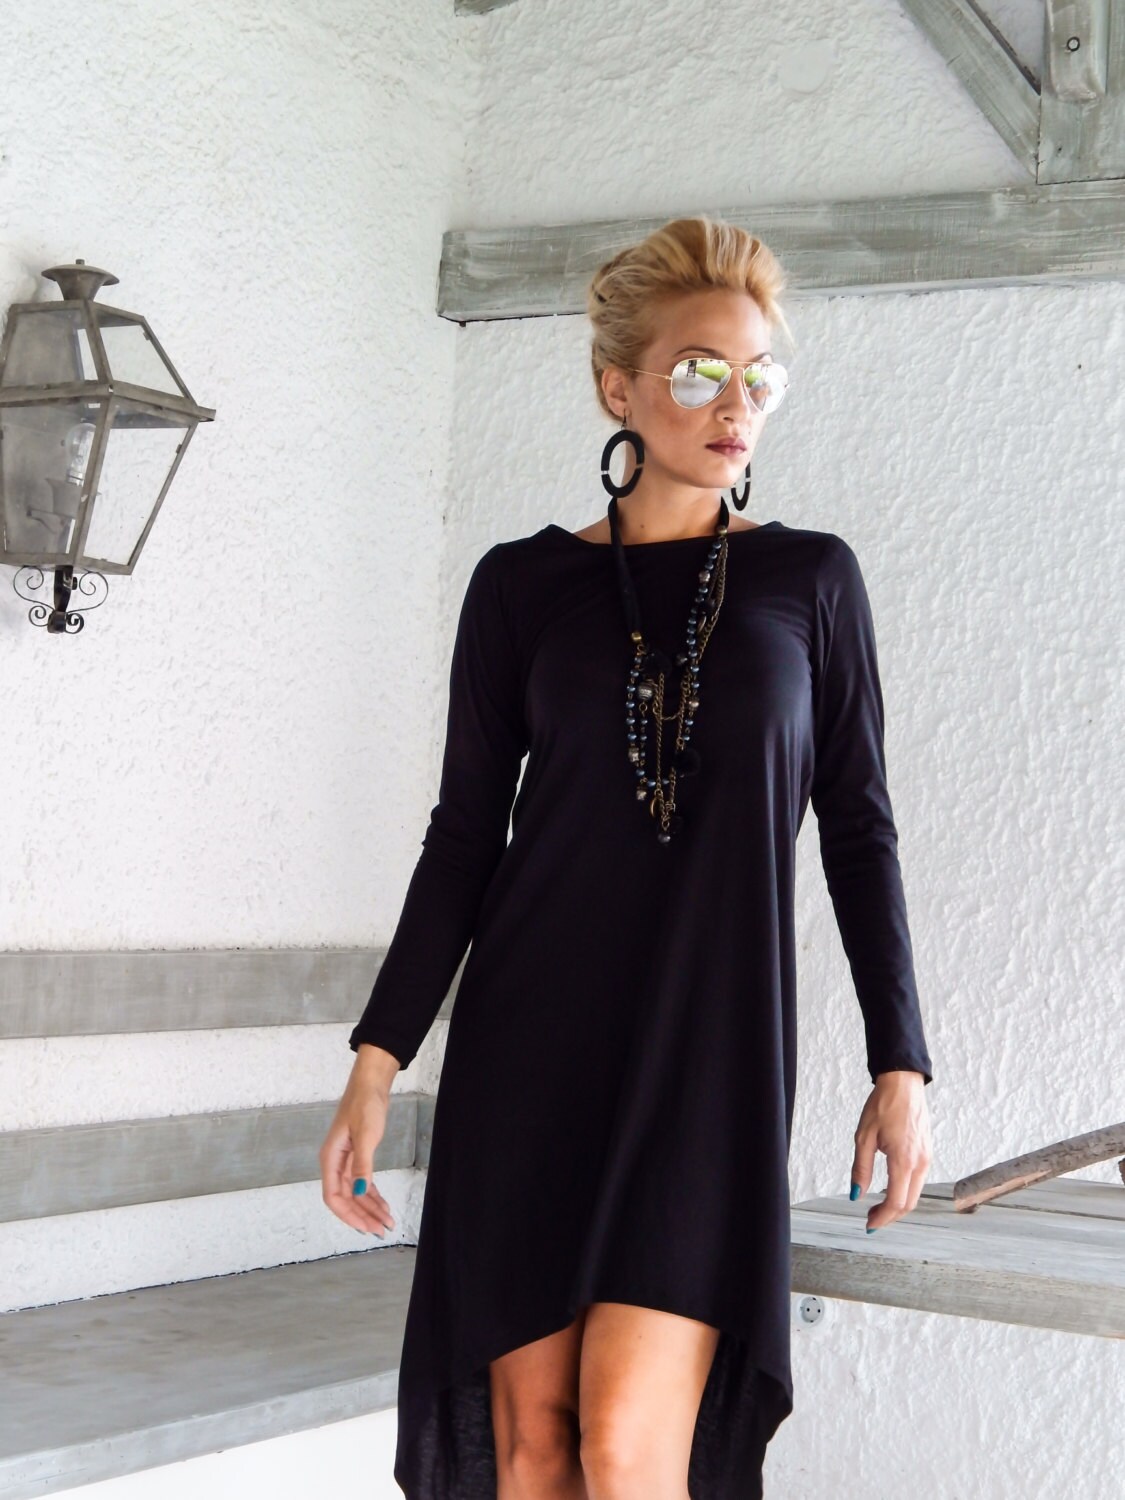 Black Asymmetric Dress Blouse Tunic / Black Dress / | Etsy